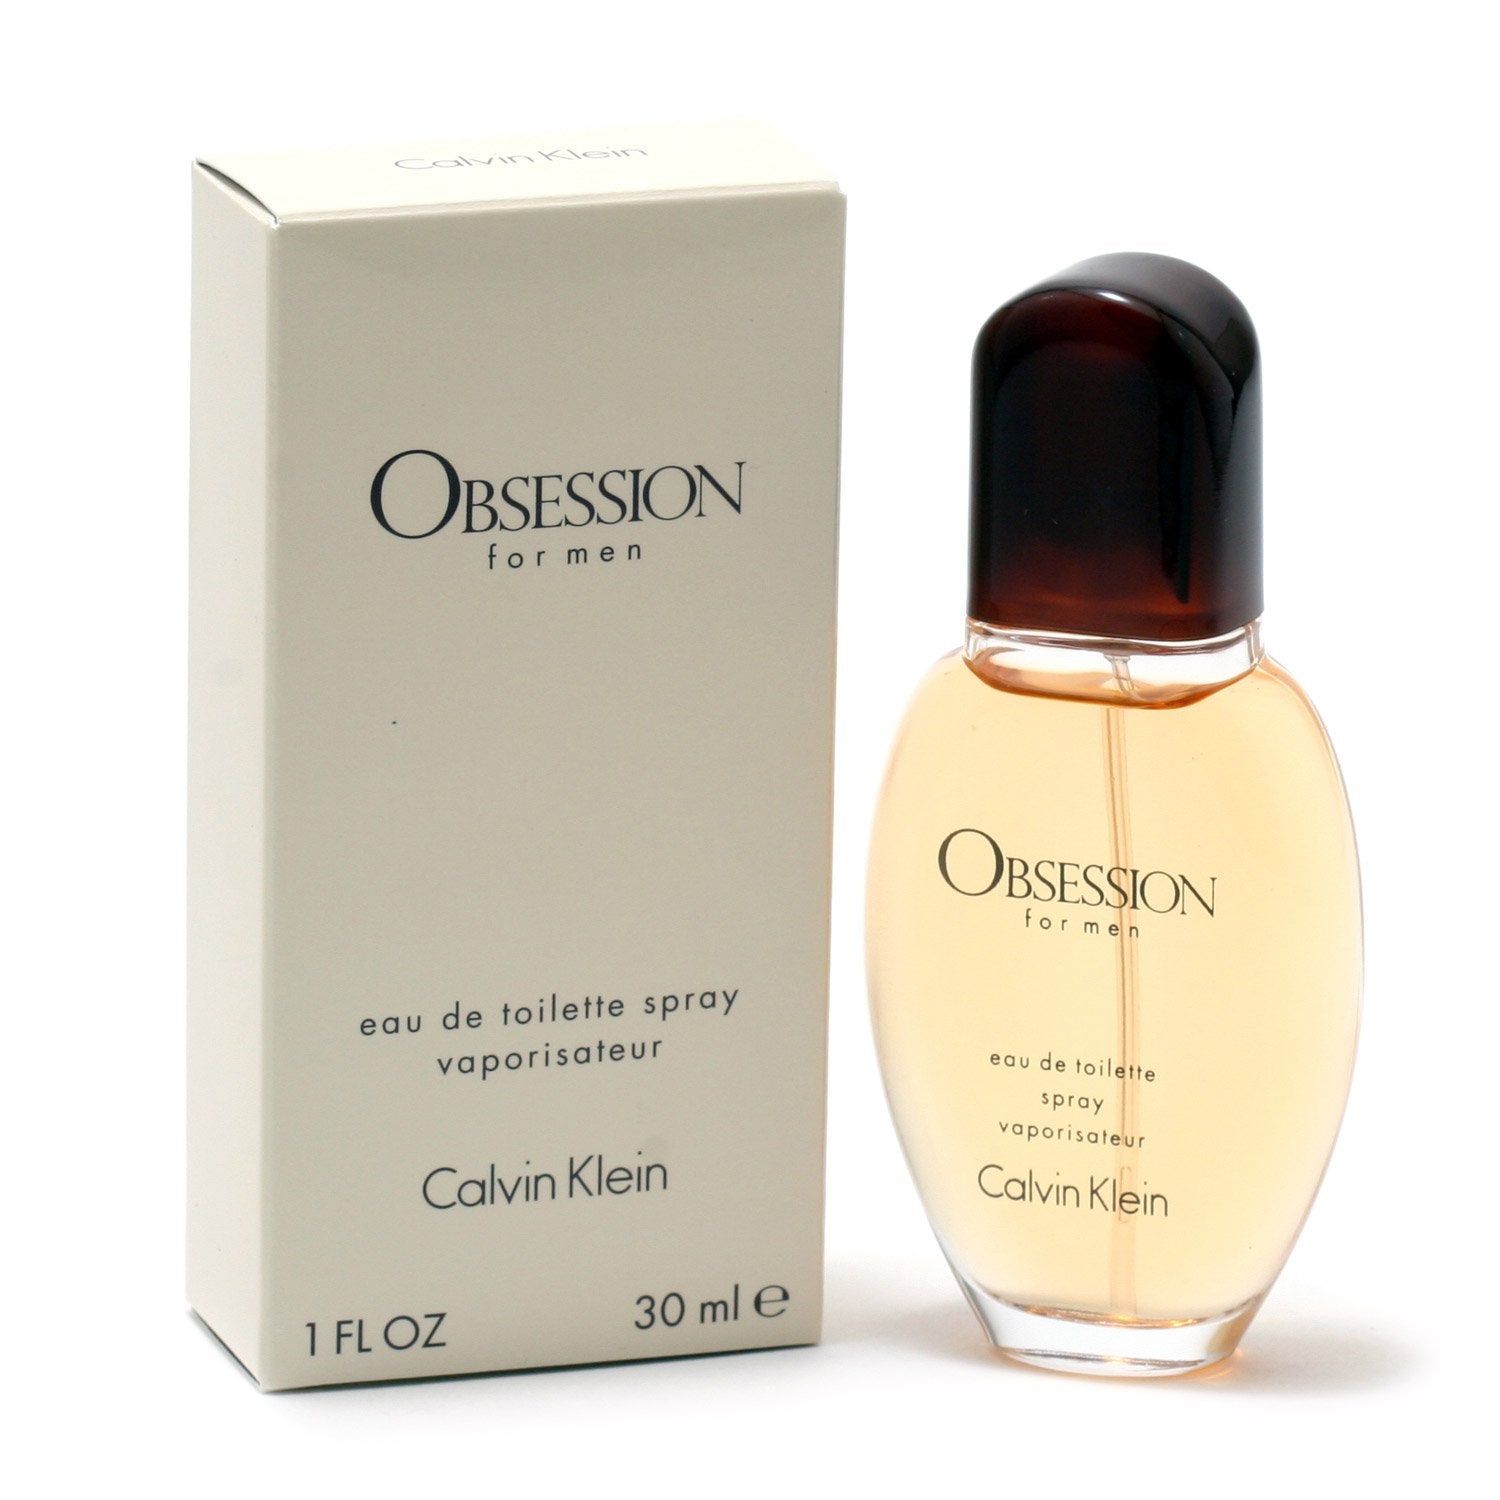 KLEIN Room - CALVIN EAU TOILETTE SPRAY DE OBSESSION MEN FOR Fragrance BY –